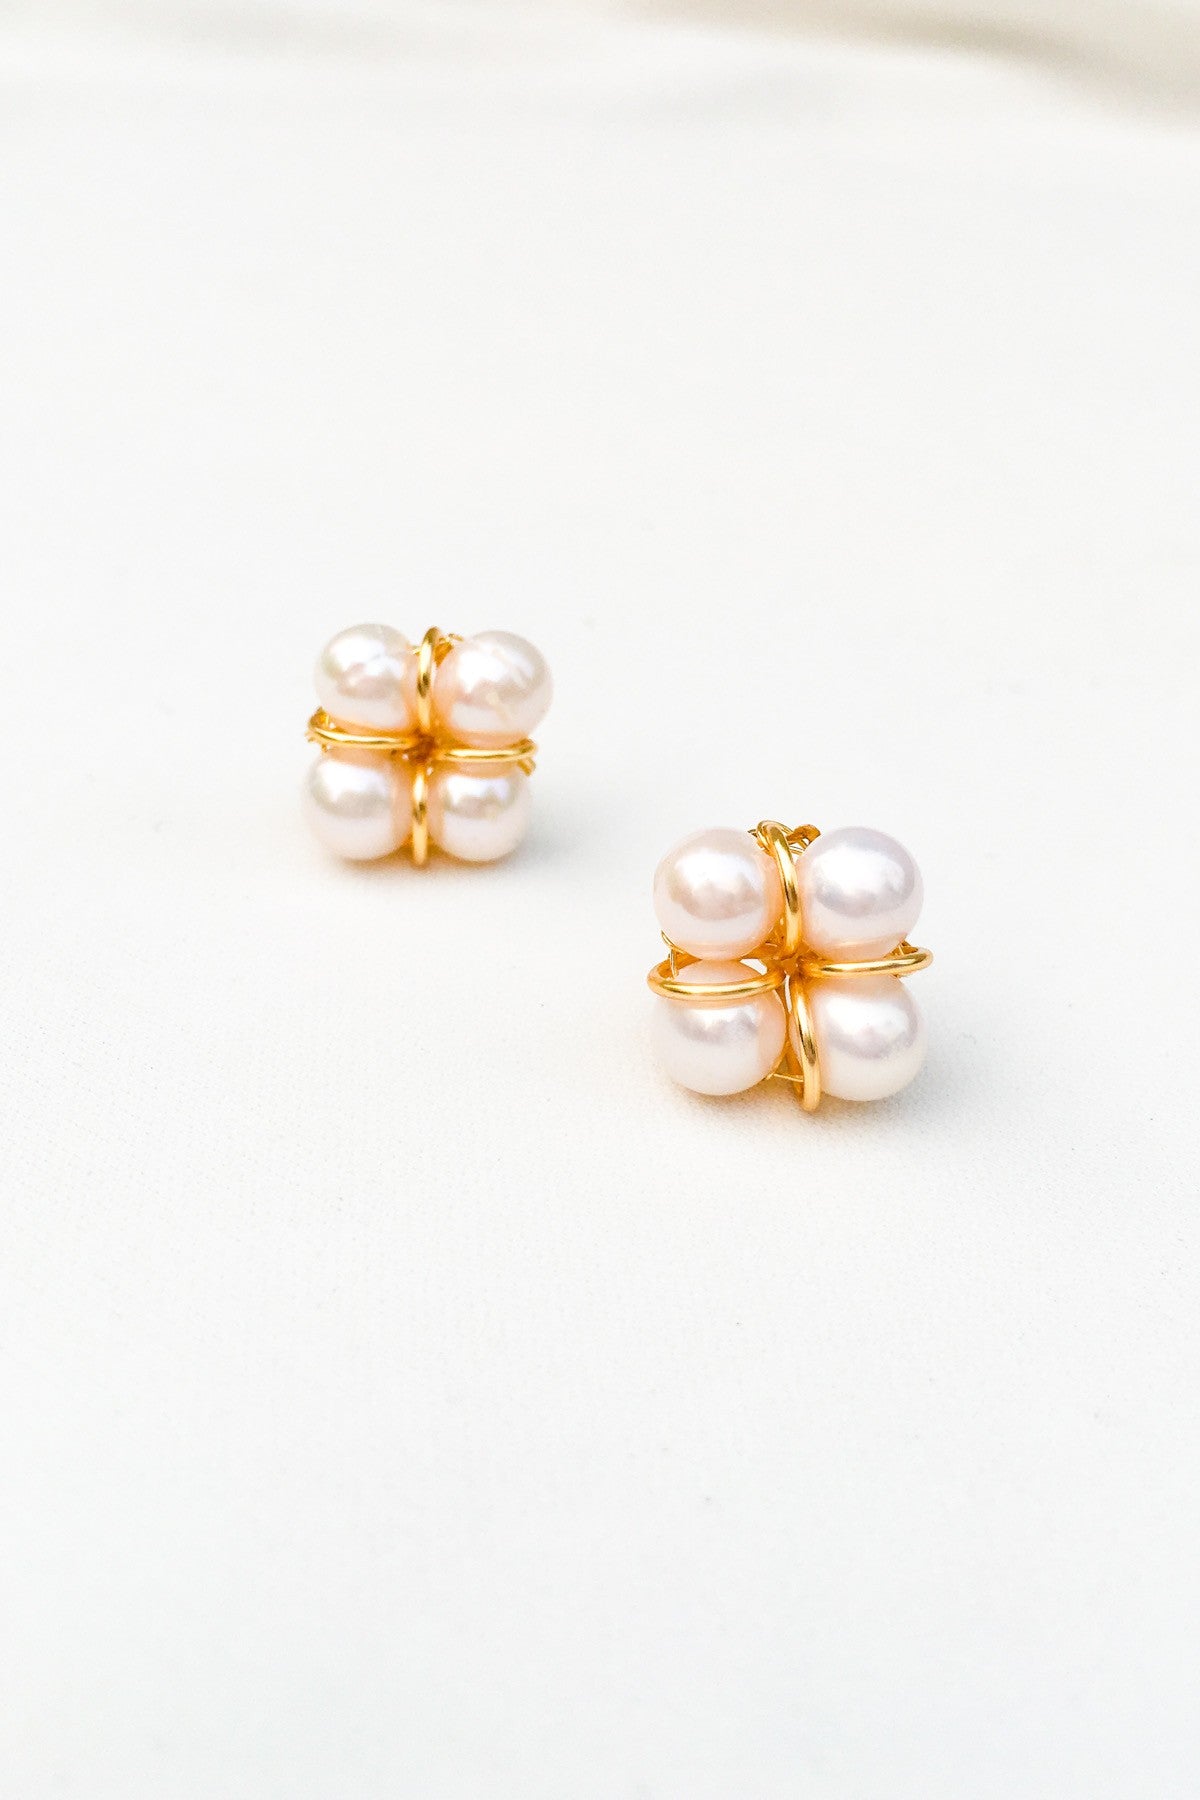 SKYE San Francisco SF shop ethical sustainable modern minimalist chic luxury women jewelry Taia 18K Gold Freshwater Pearl Earrings